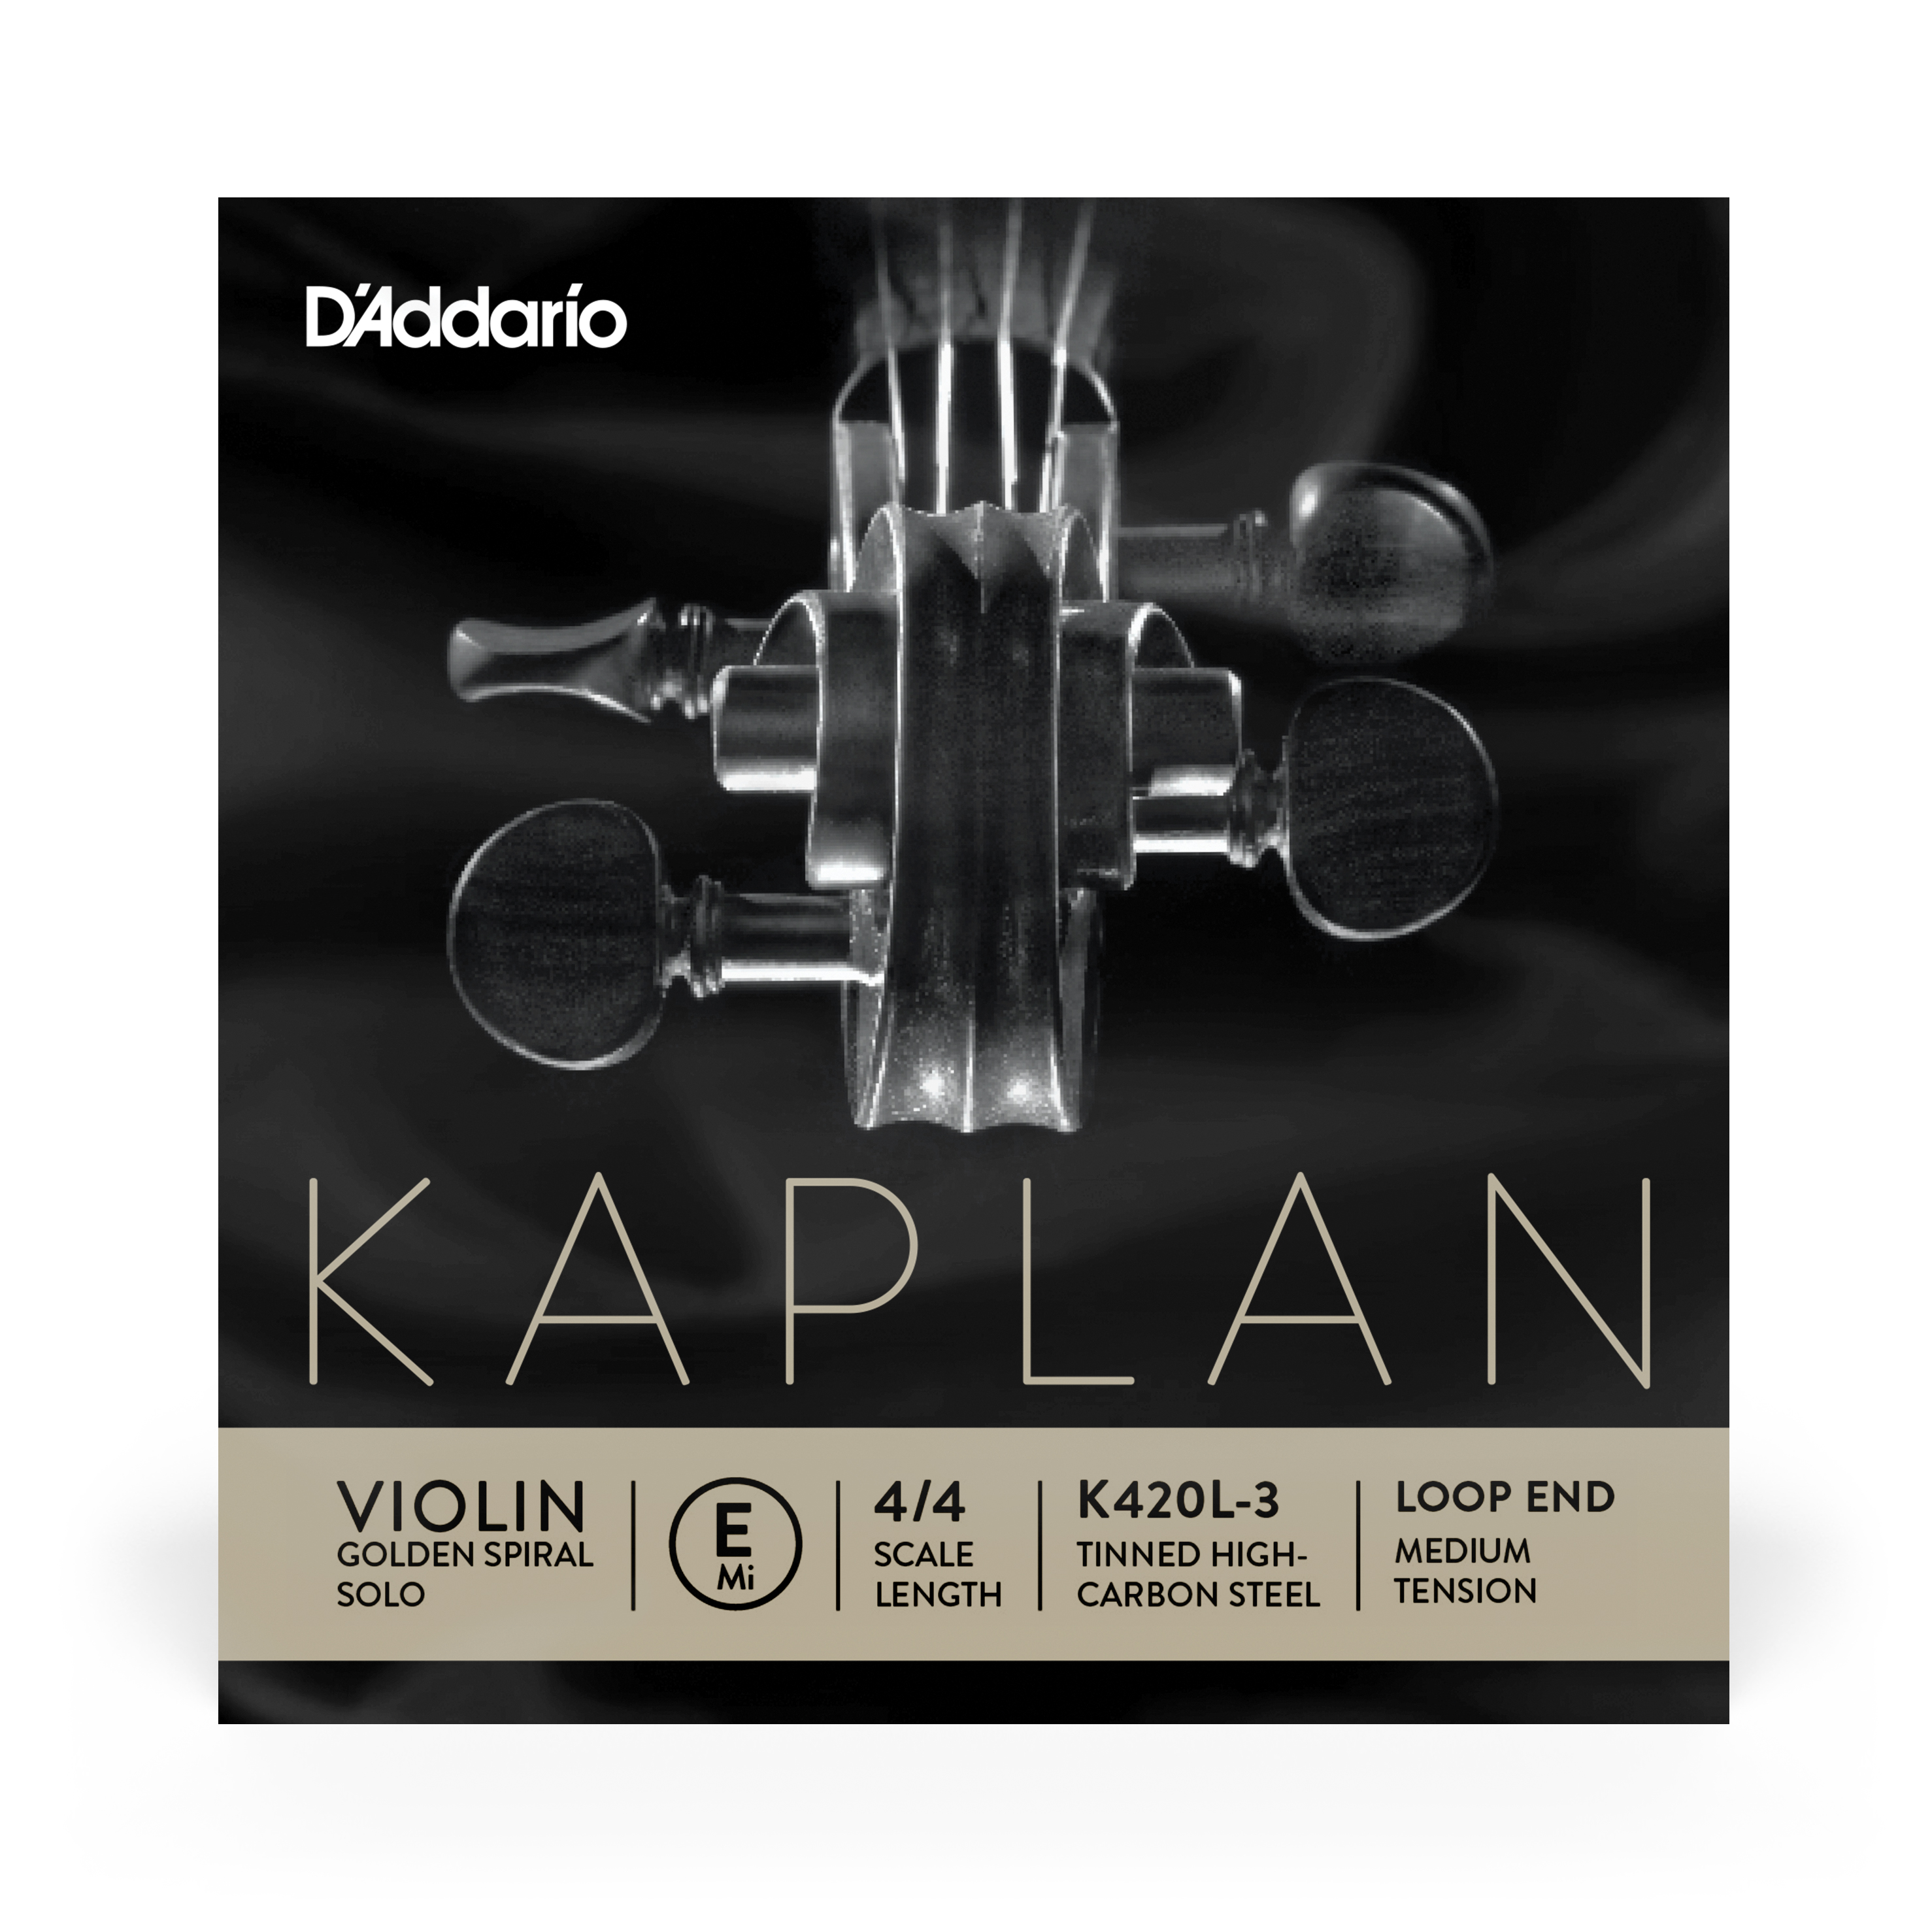 Daddario orchestral it K420l-3 corda singola mi d'addario kaplan golden spiral solo per violino, senza pallino finale, scala 4/4, tensione media